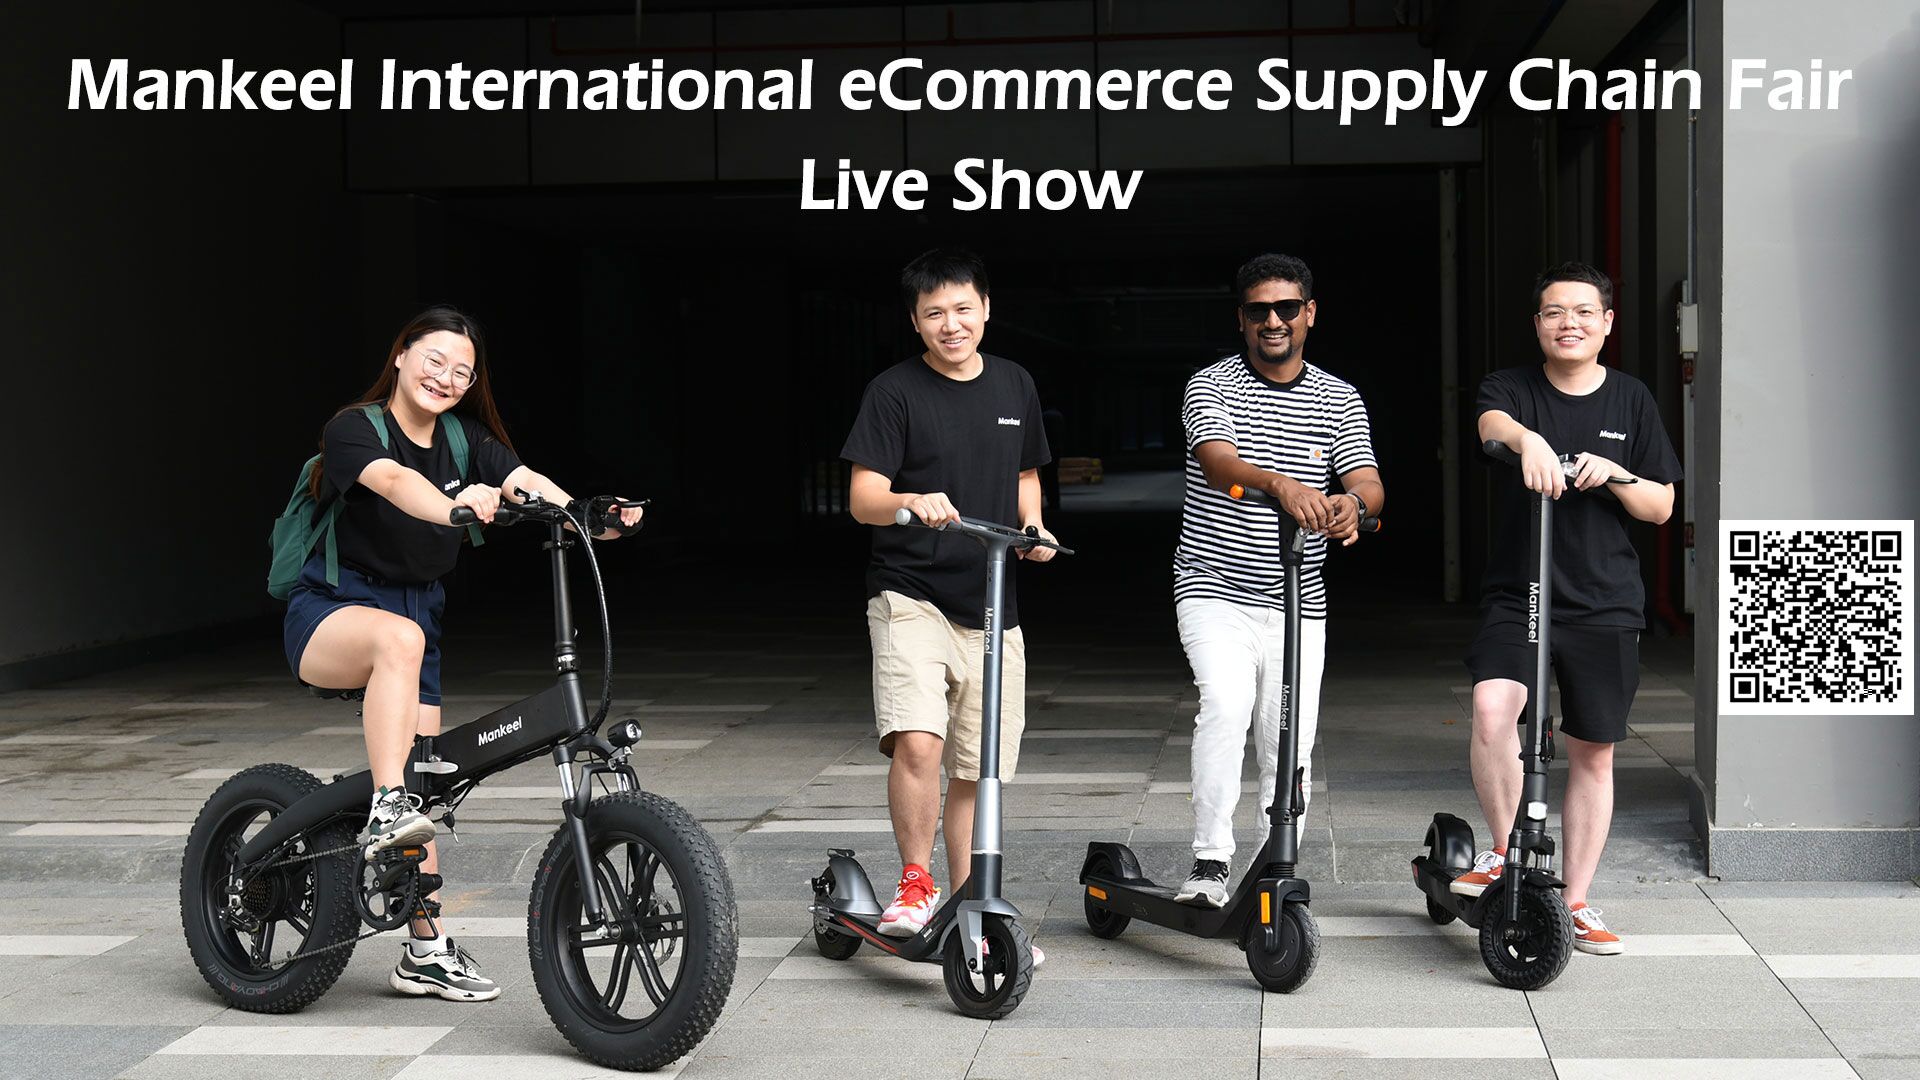 Live show of International eCommerce Supply Chain Fair on September 23